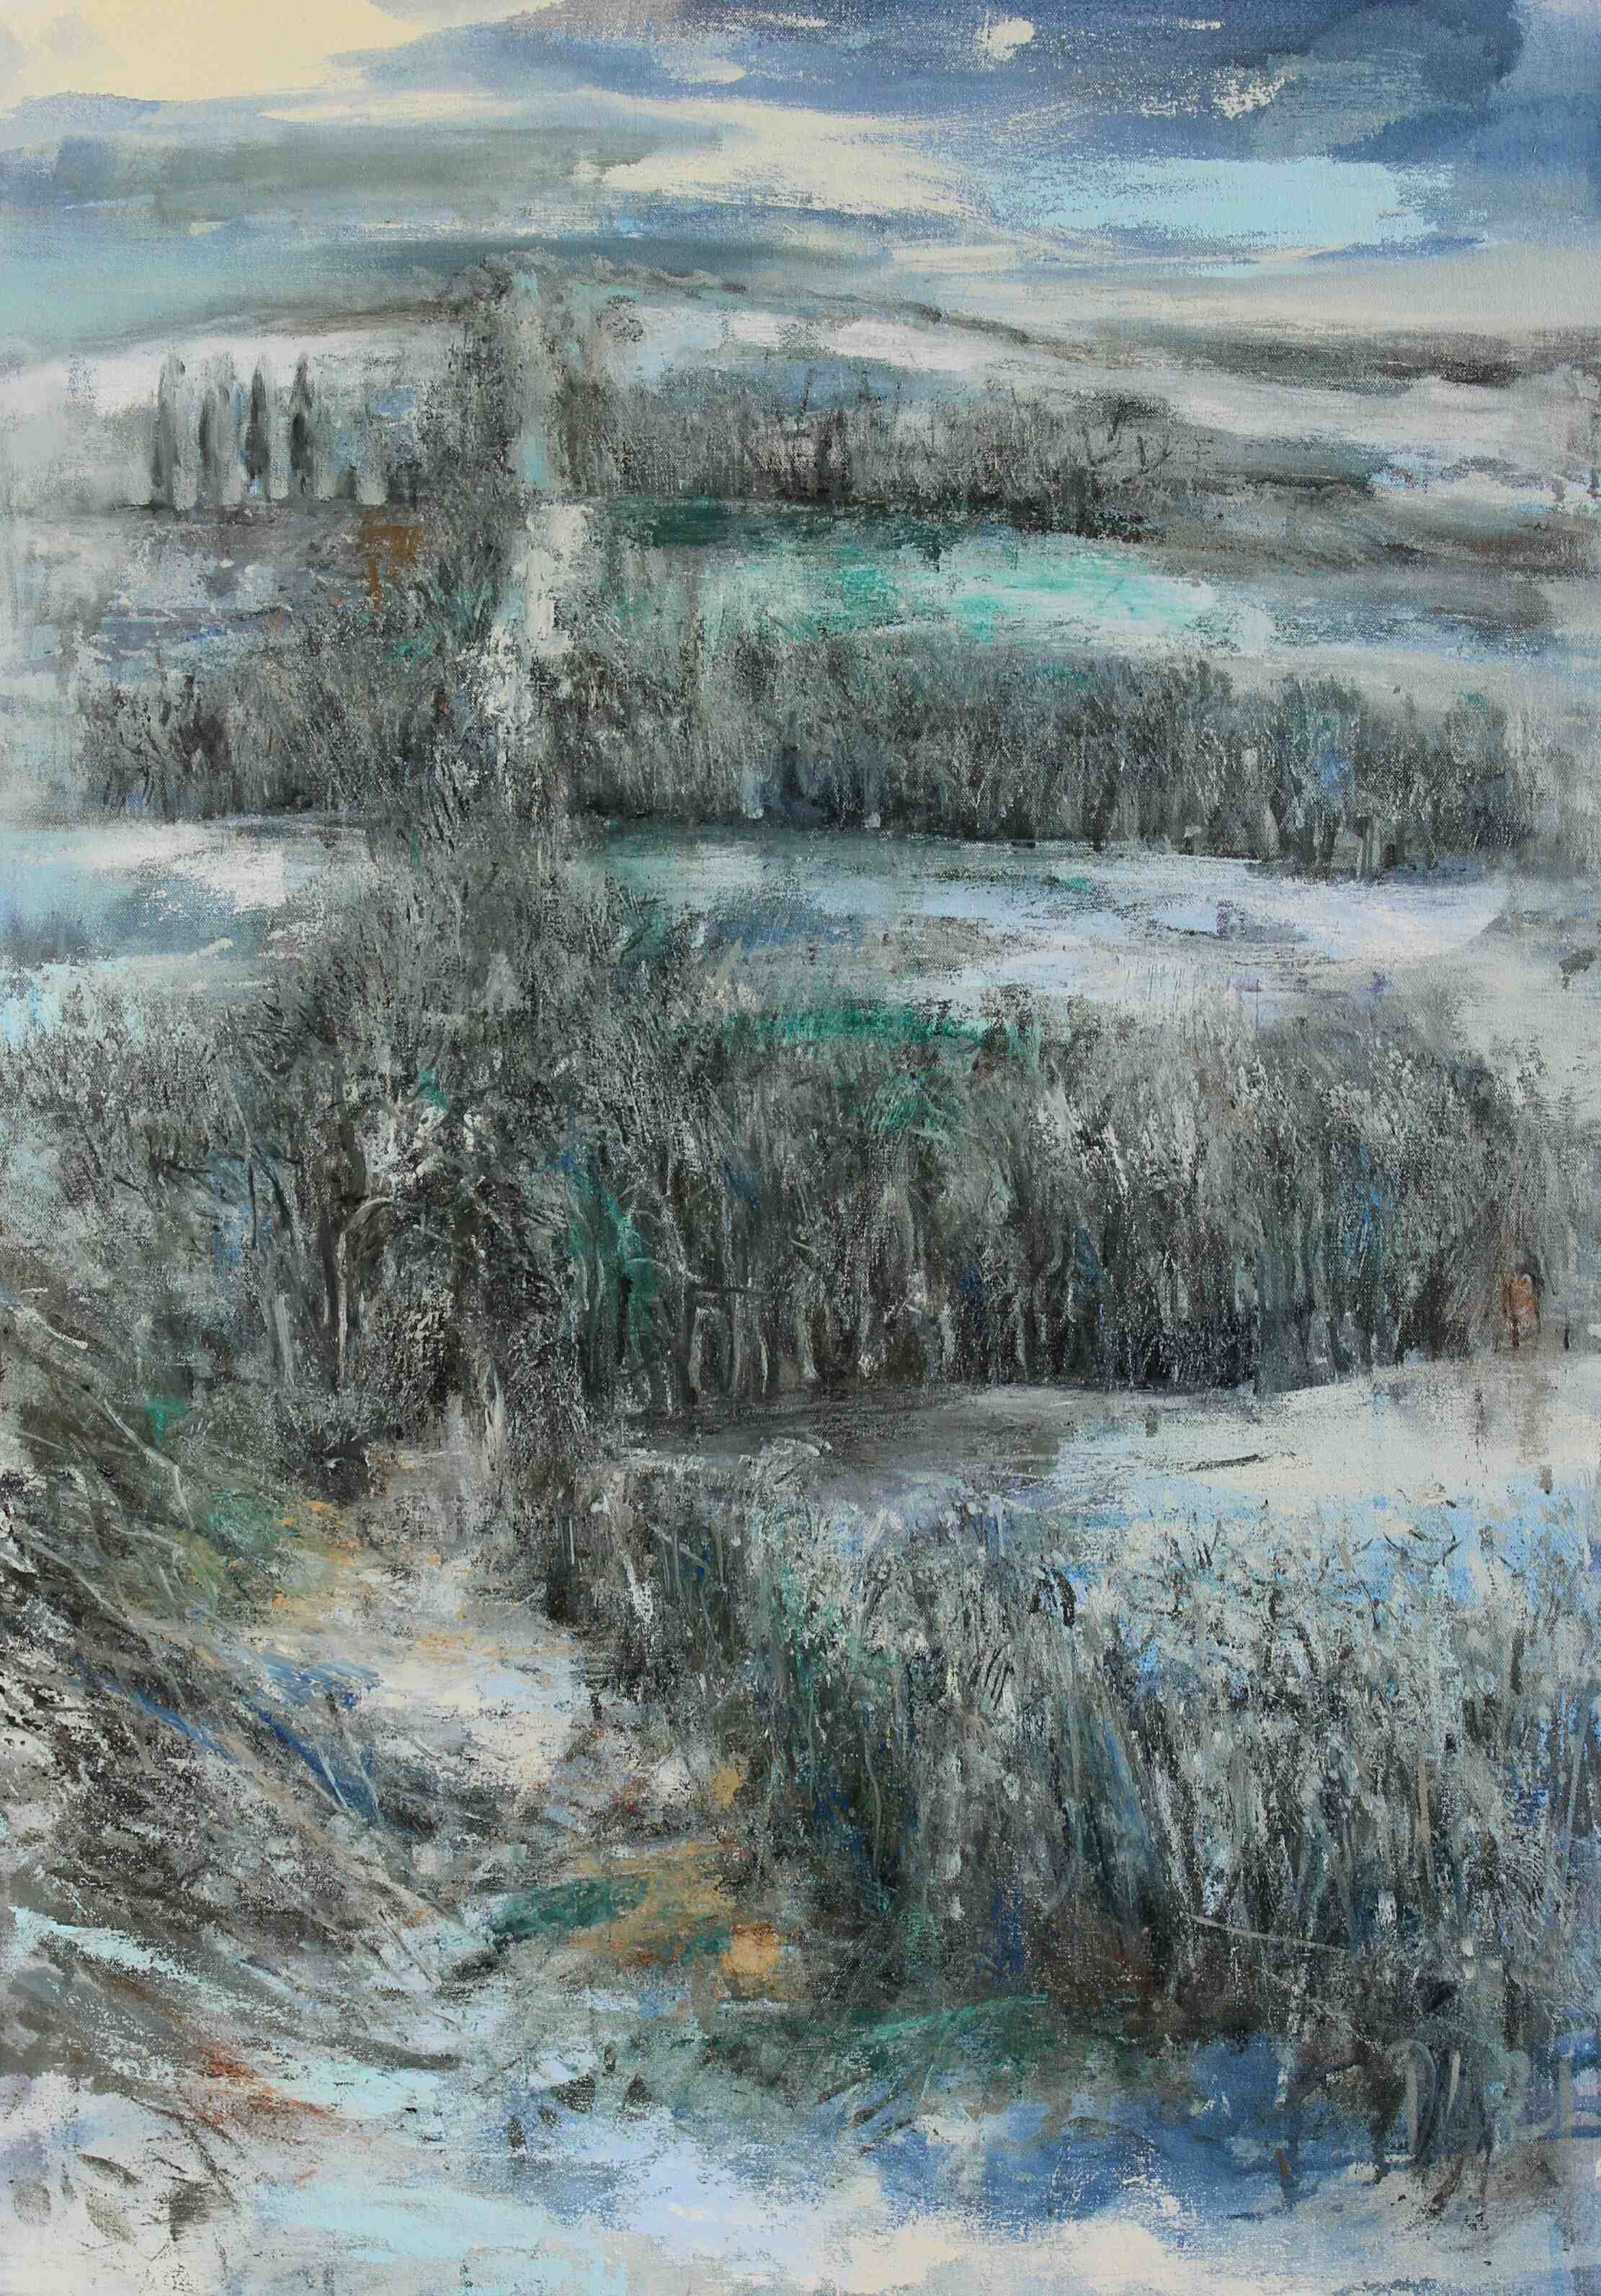 Winter, an oil on canvas impressionistic landscape painting by David Hugh Lockett